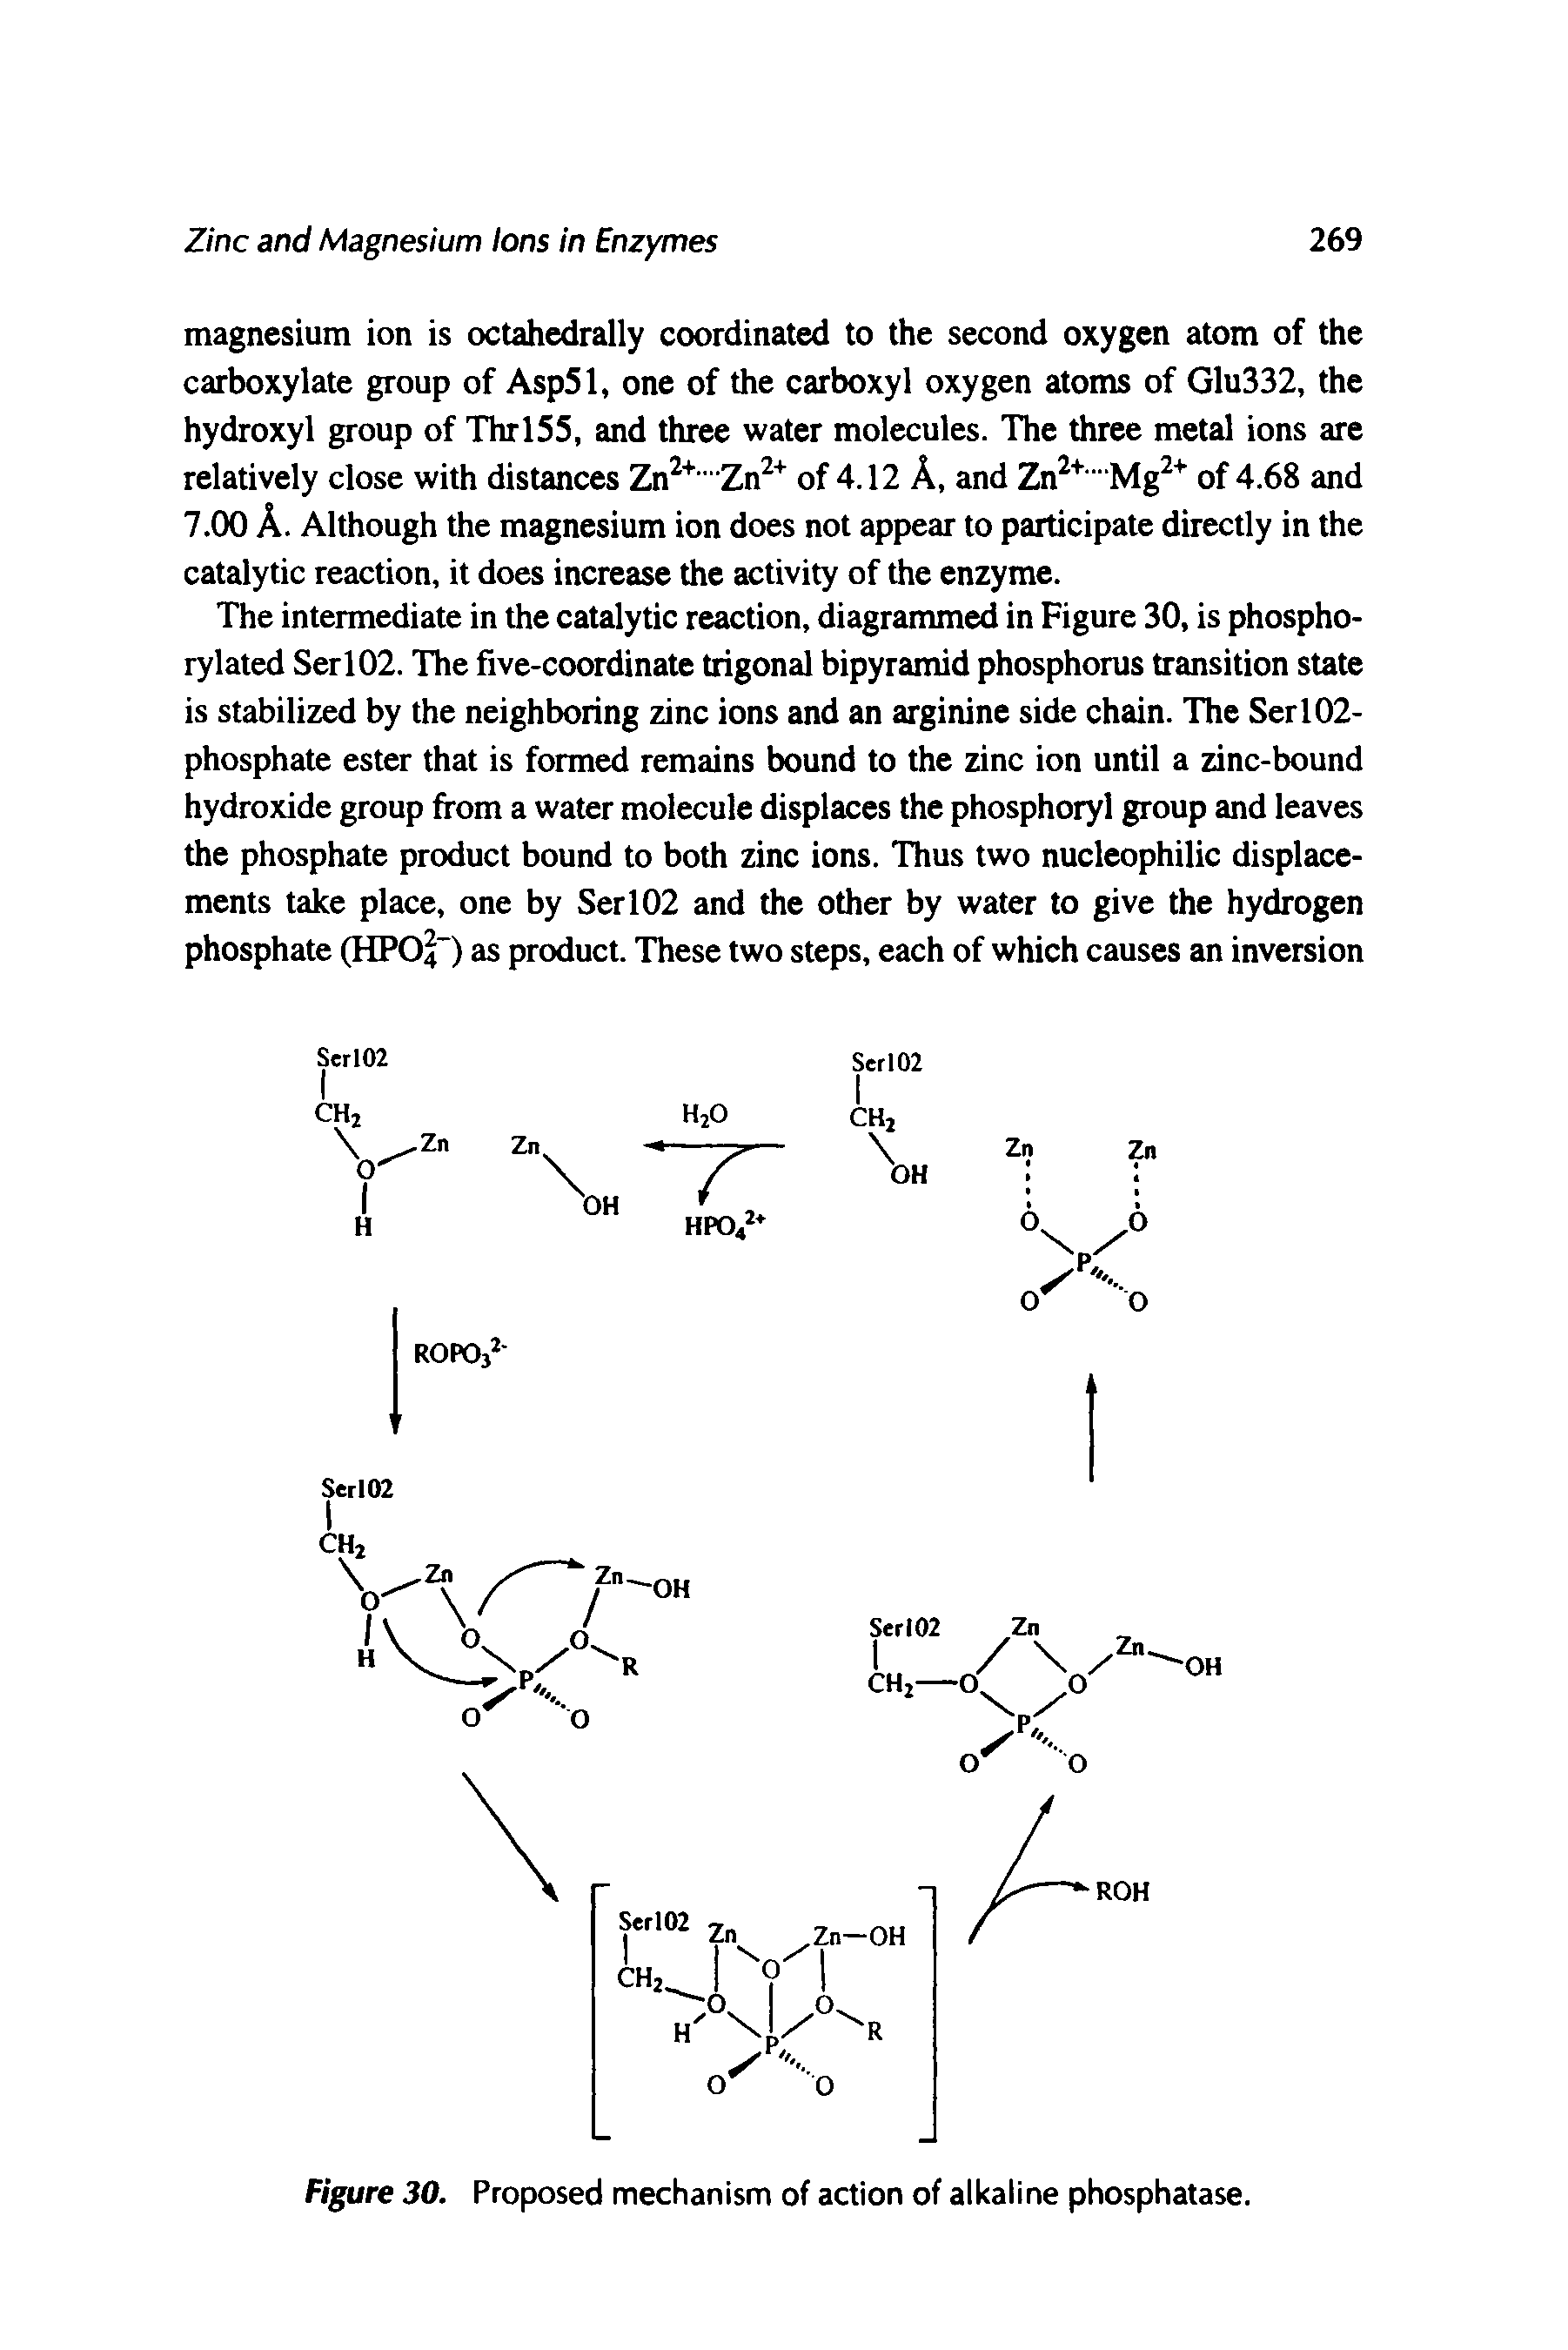 Figure 30. Proposed mechanism of action of alkaline phosphatase.